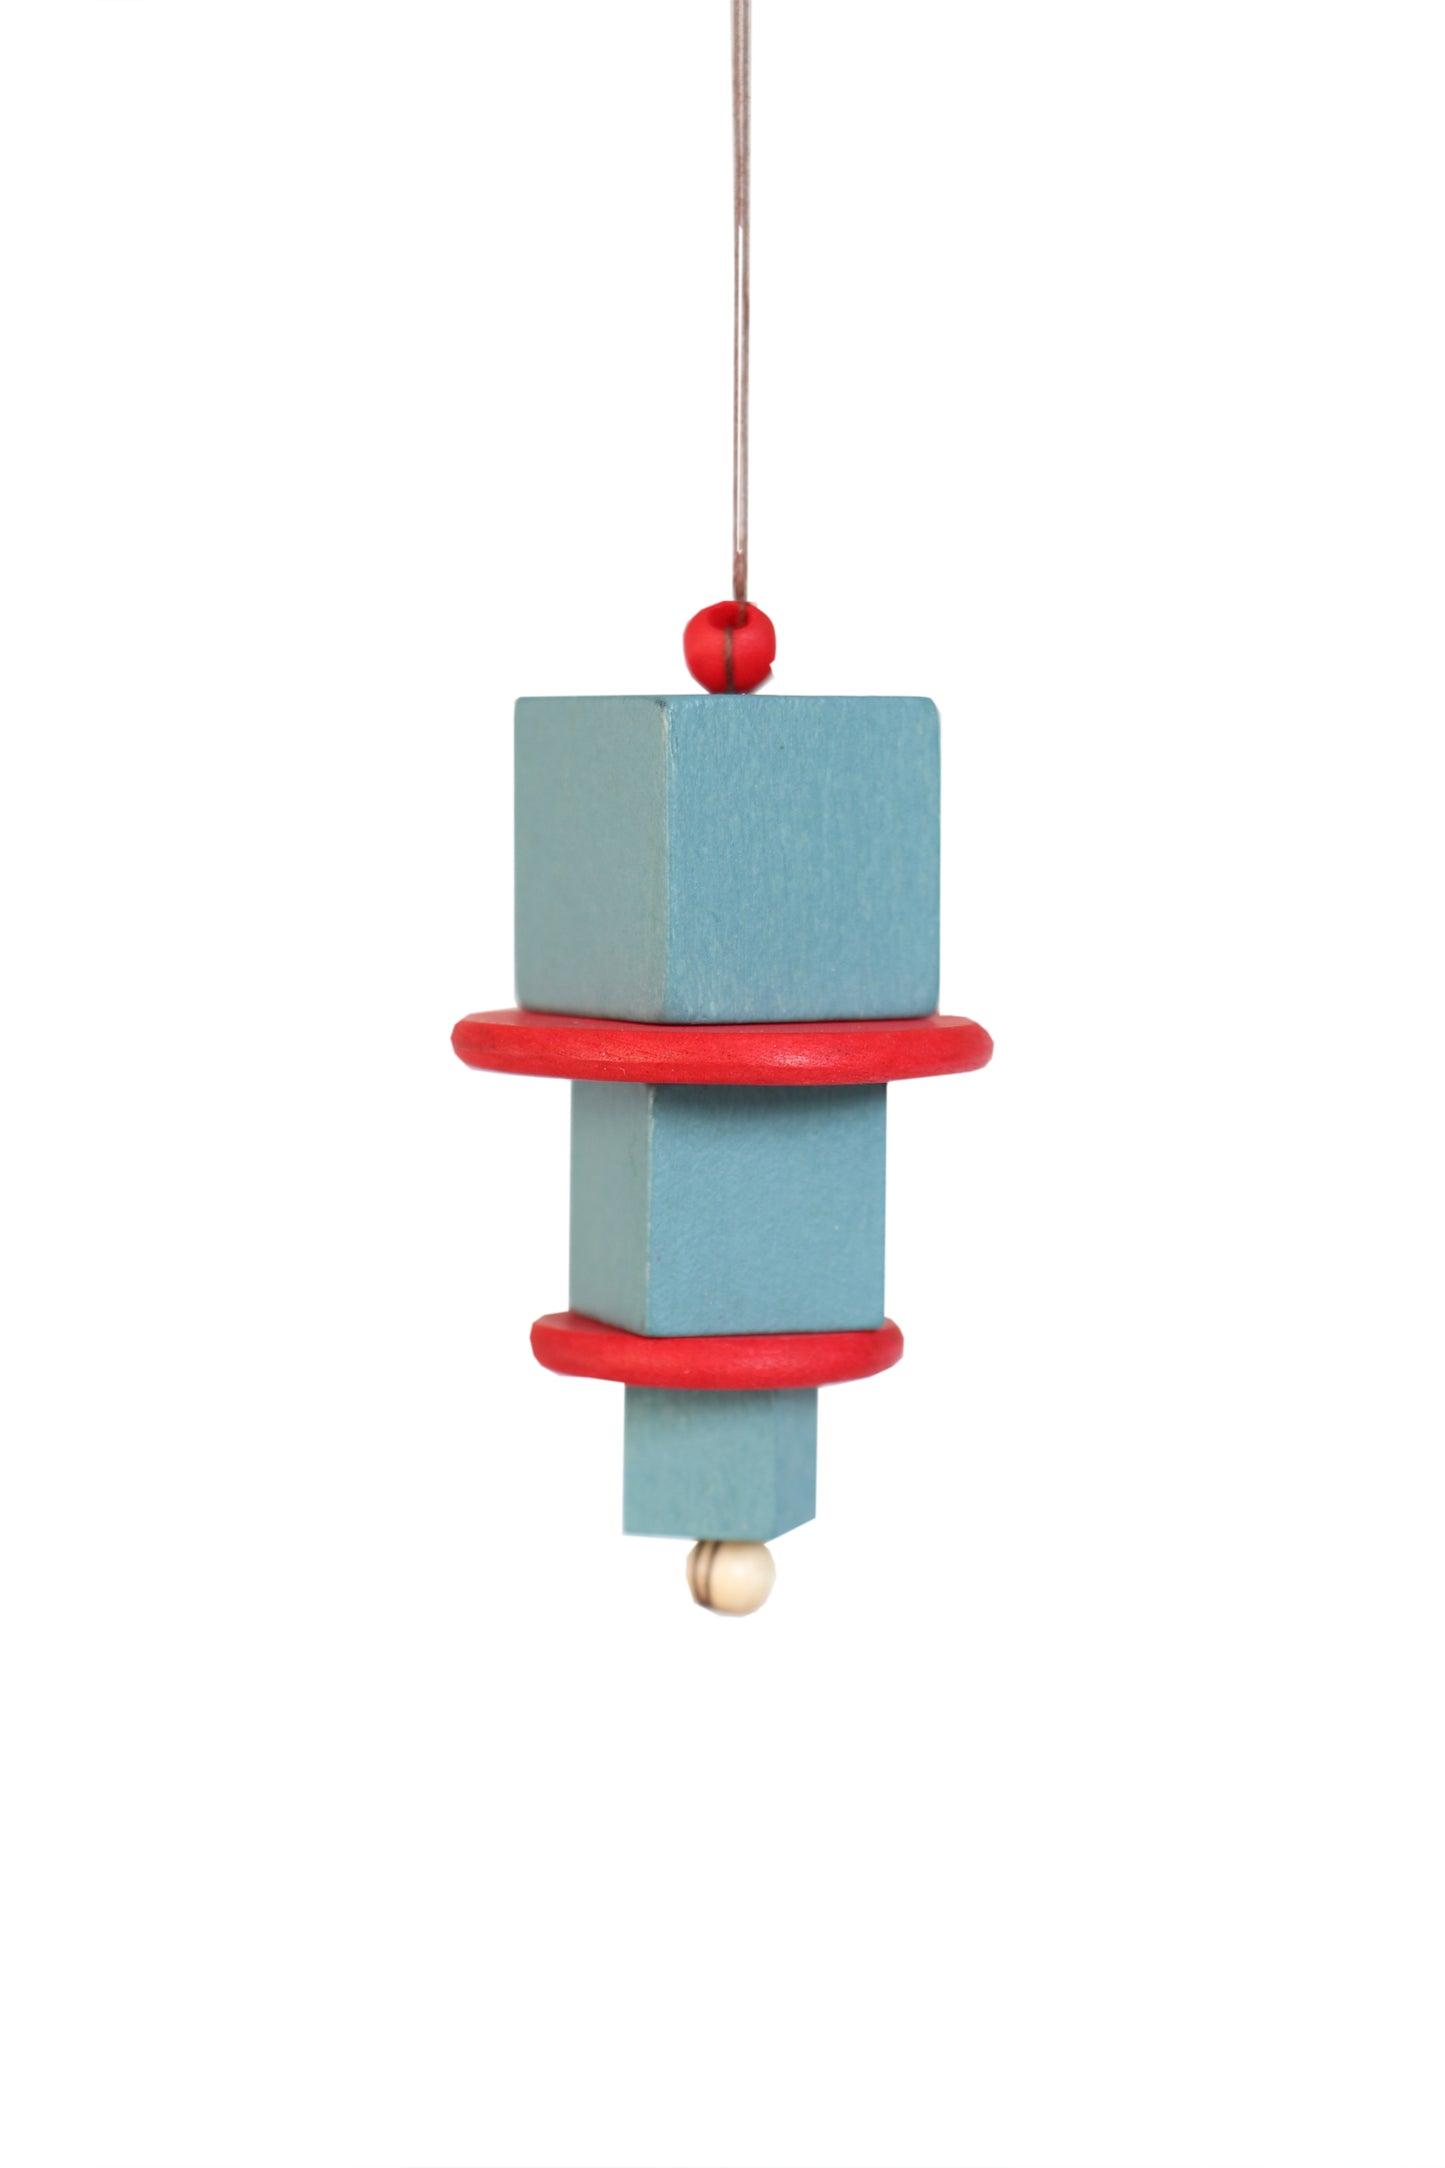 IC Design Classics - Bauhaus Christmas Ornaments